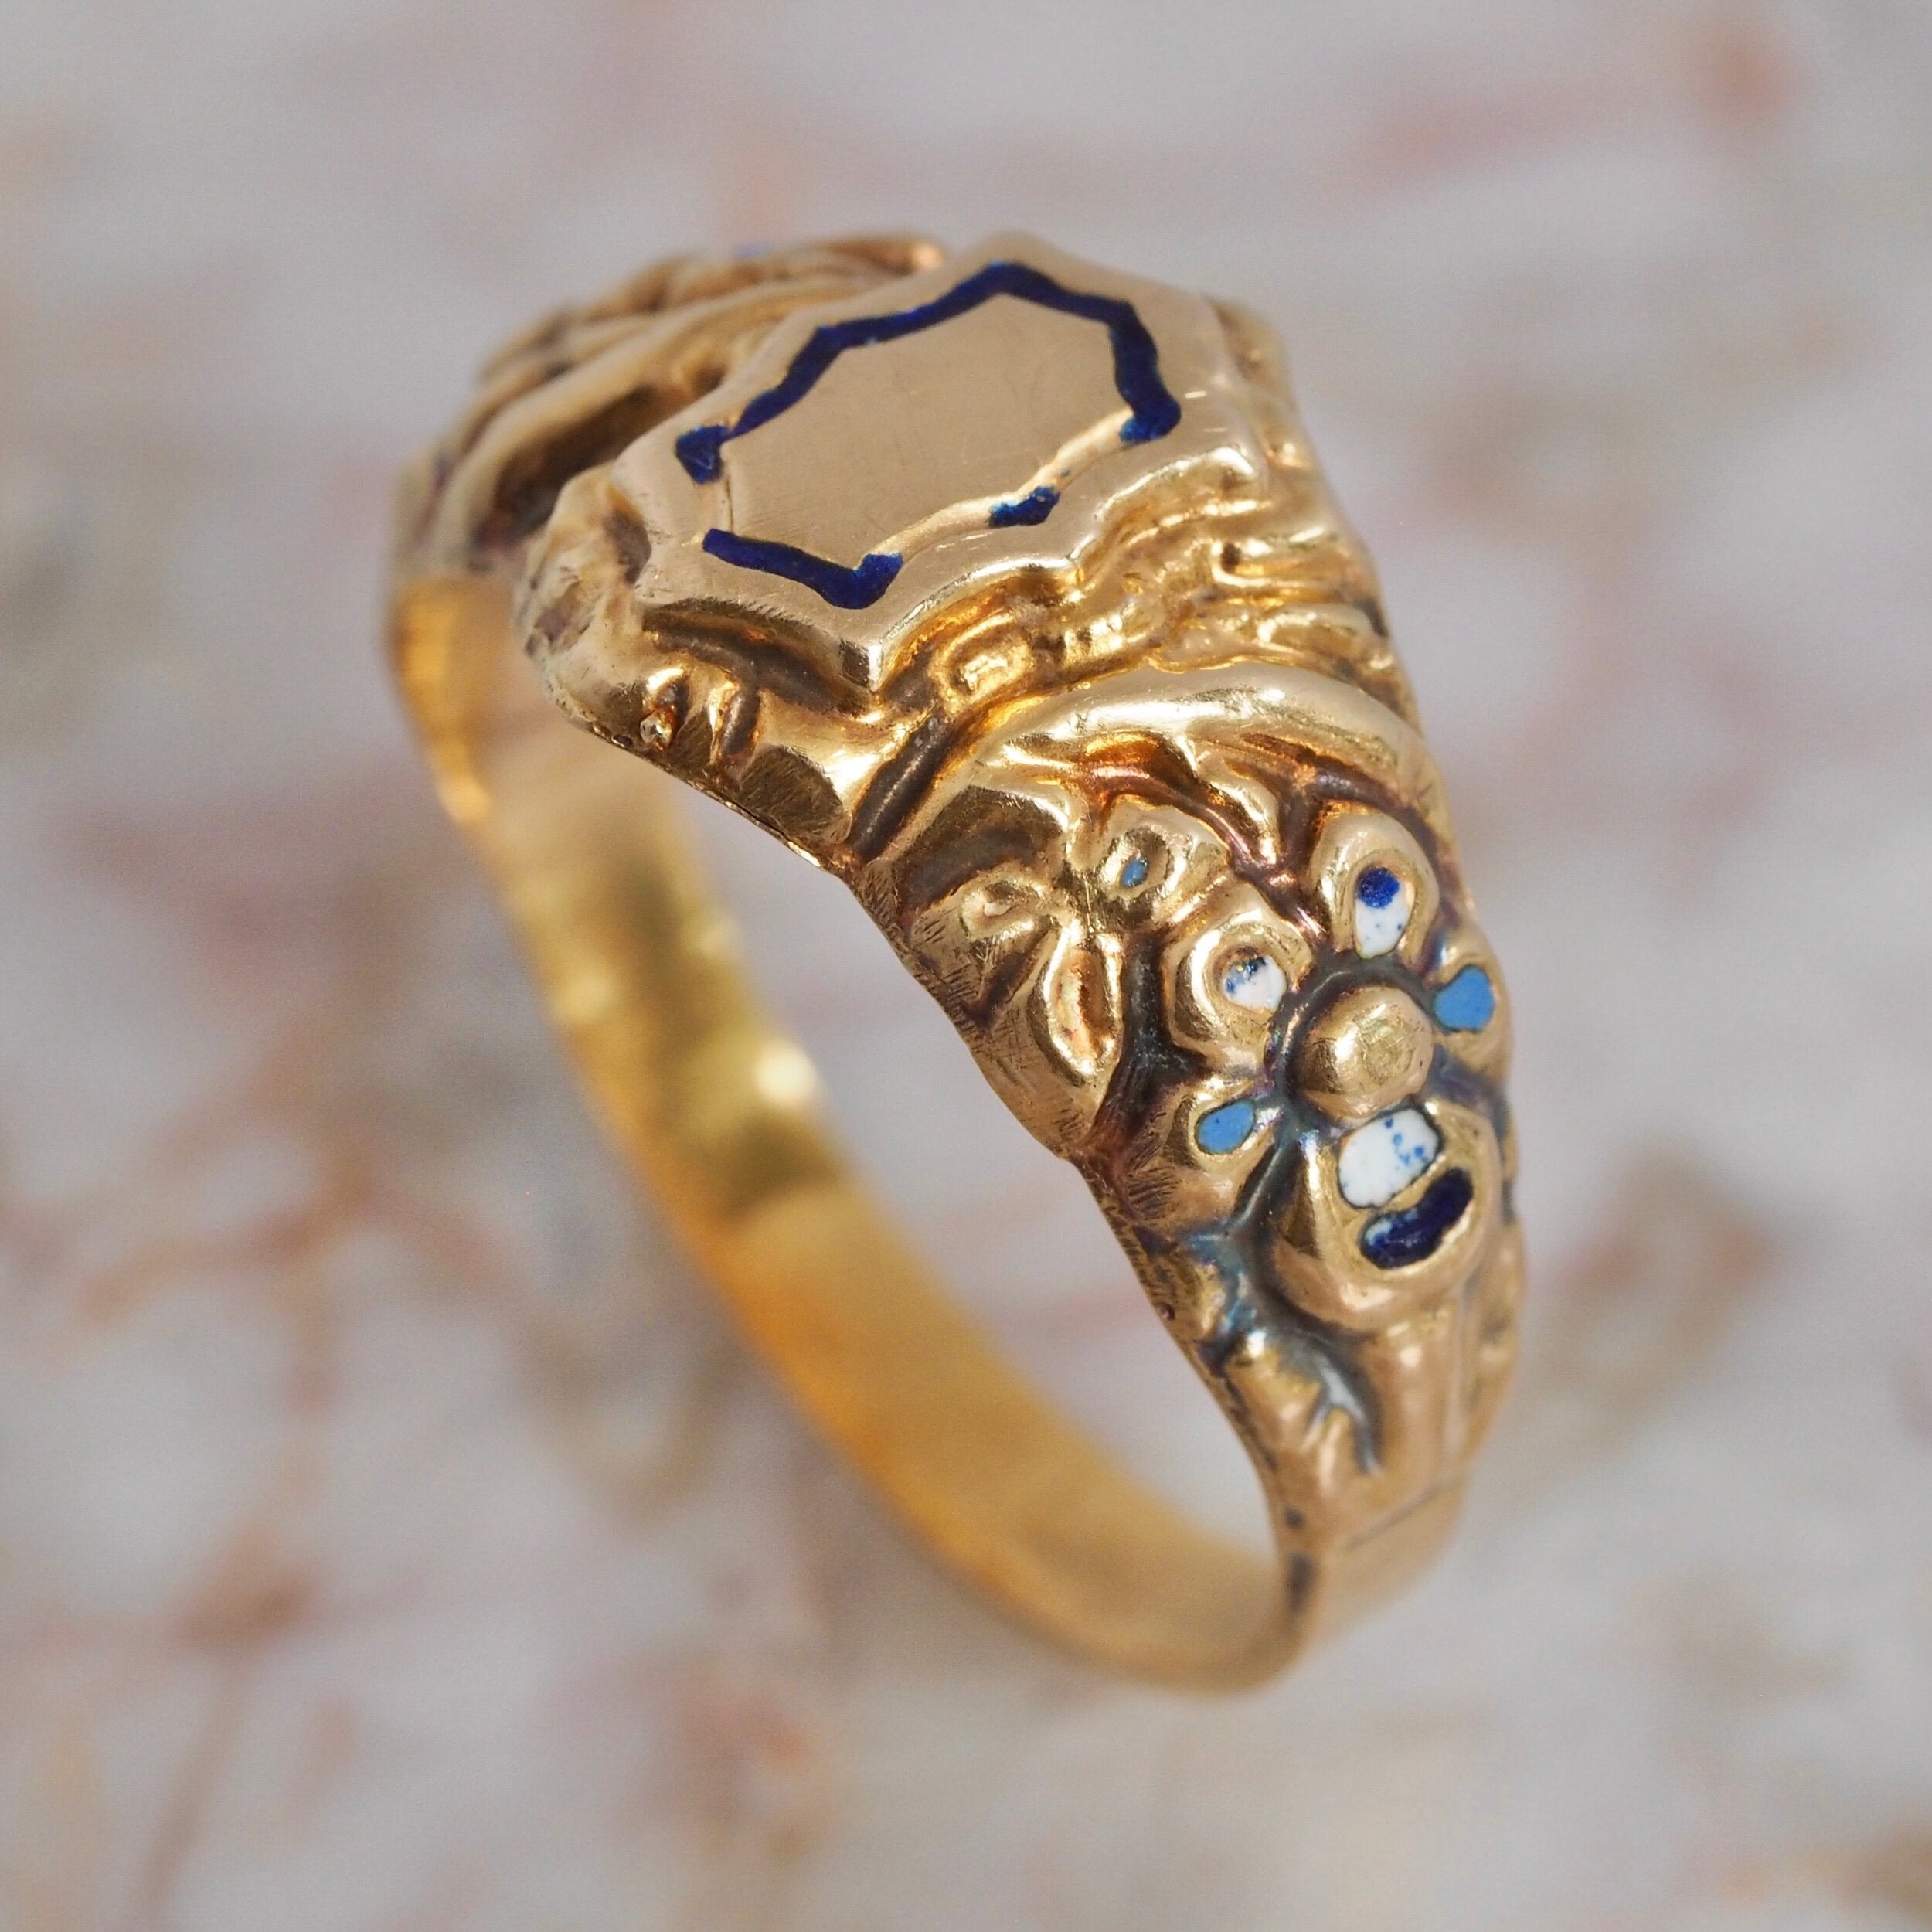 Antique Georgian/Early Victorian 18k Gold Enamel Ring